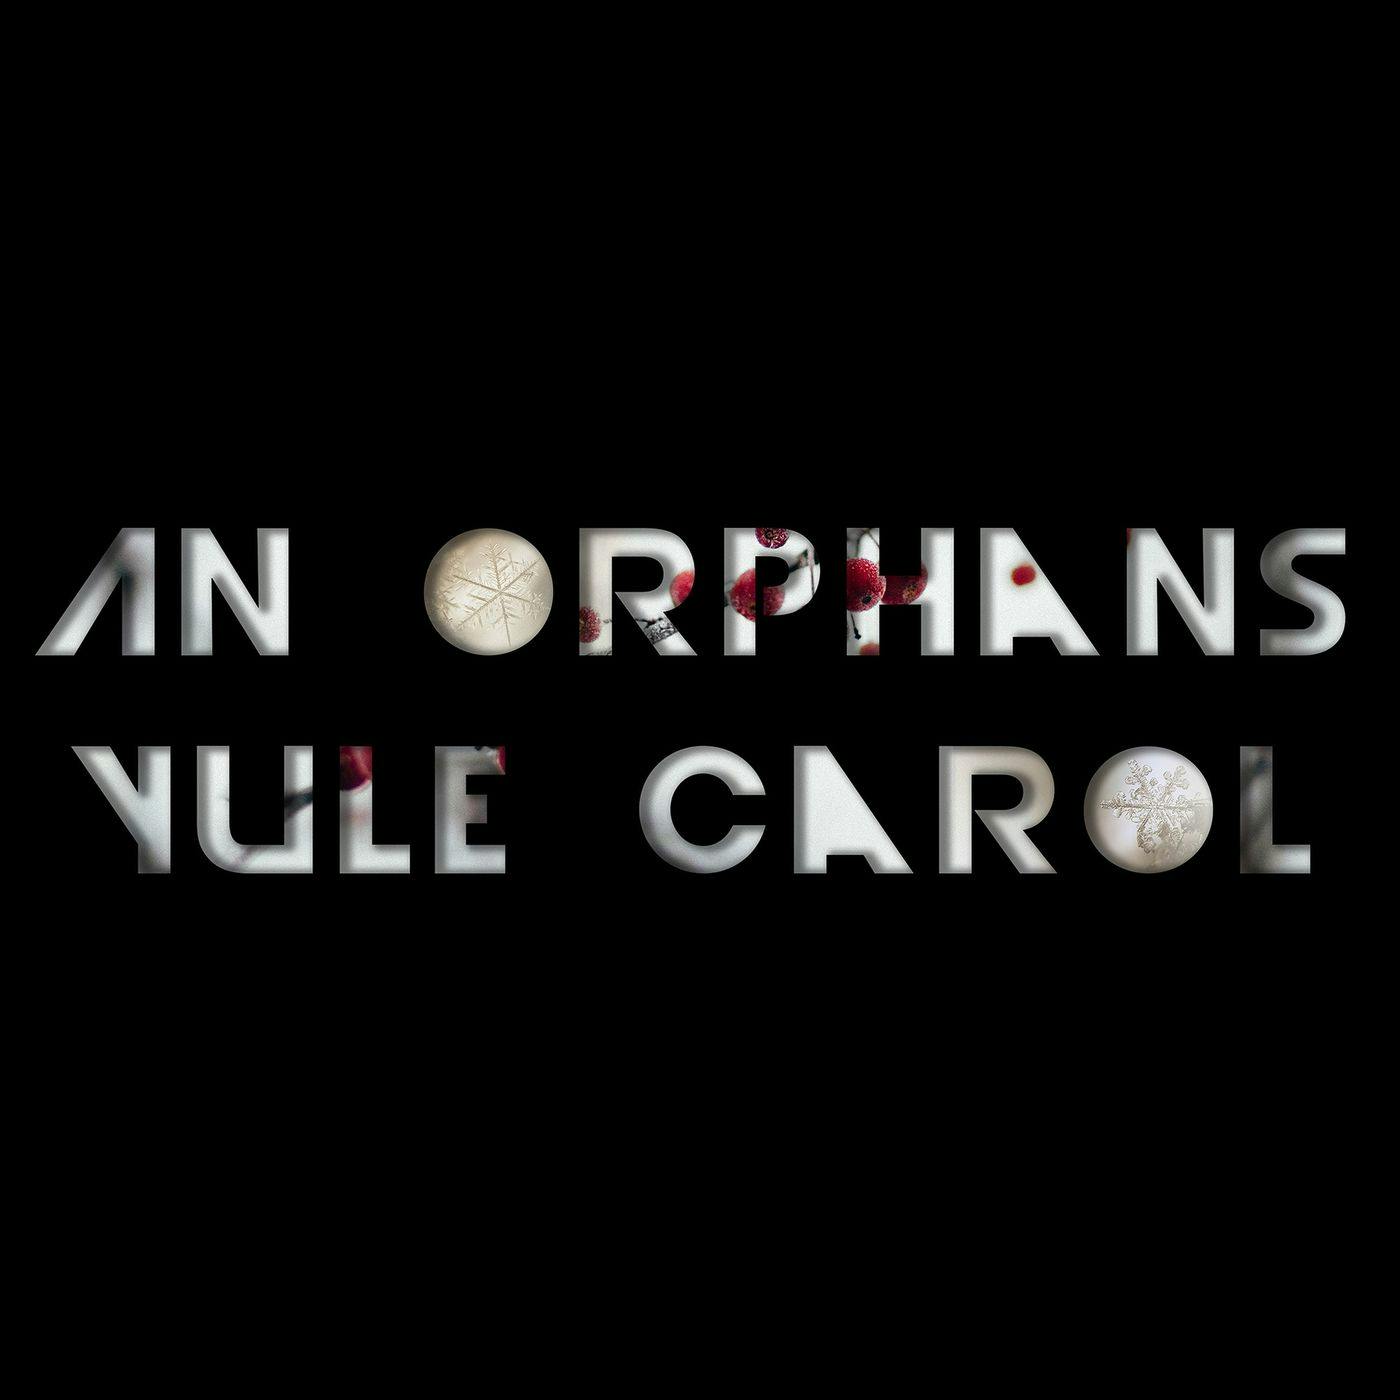 An Orphans' Yule Carol